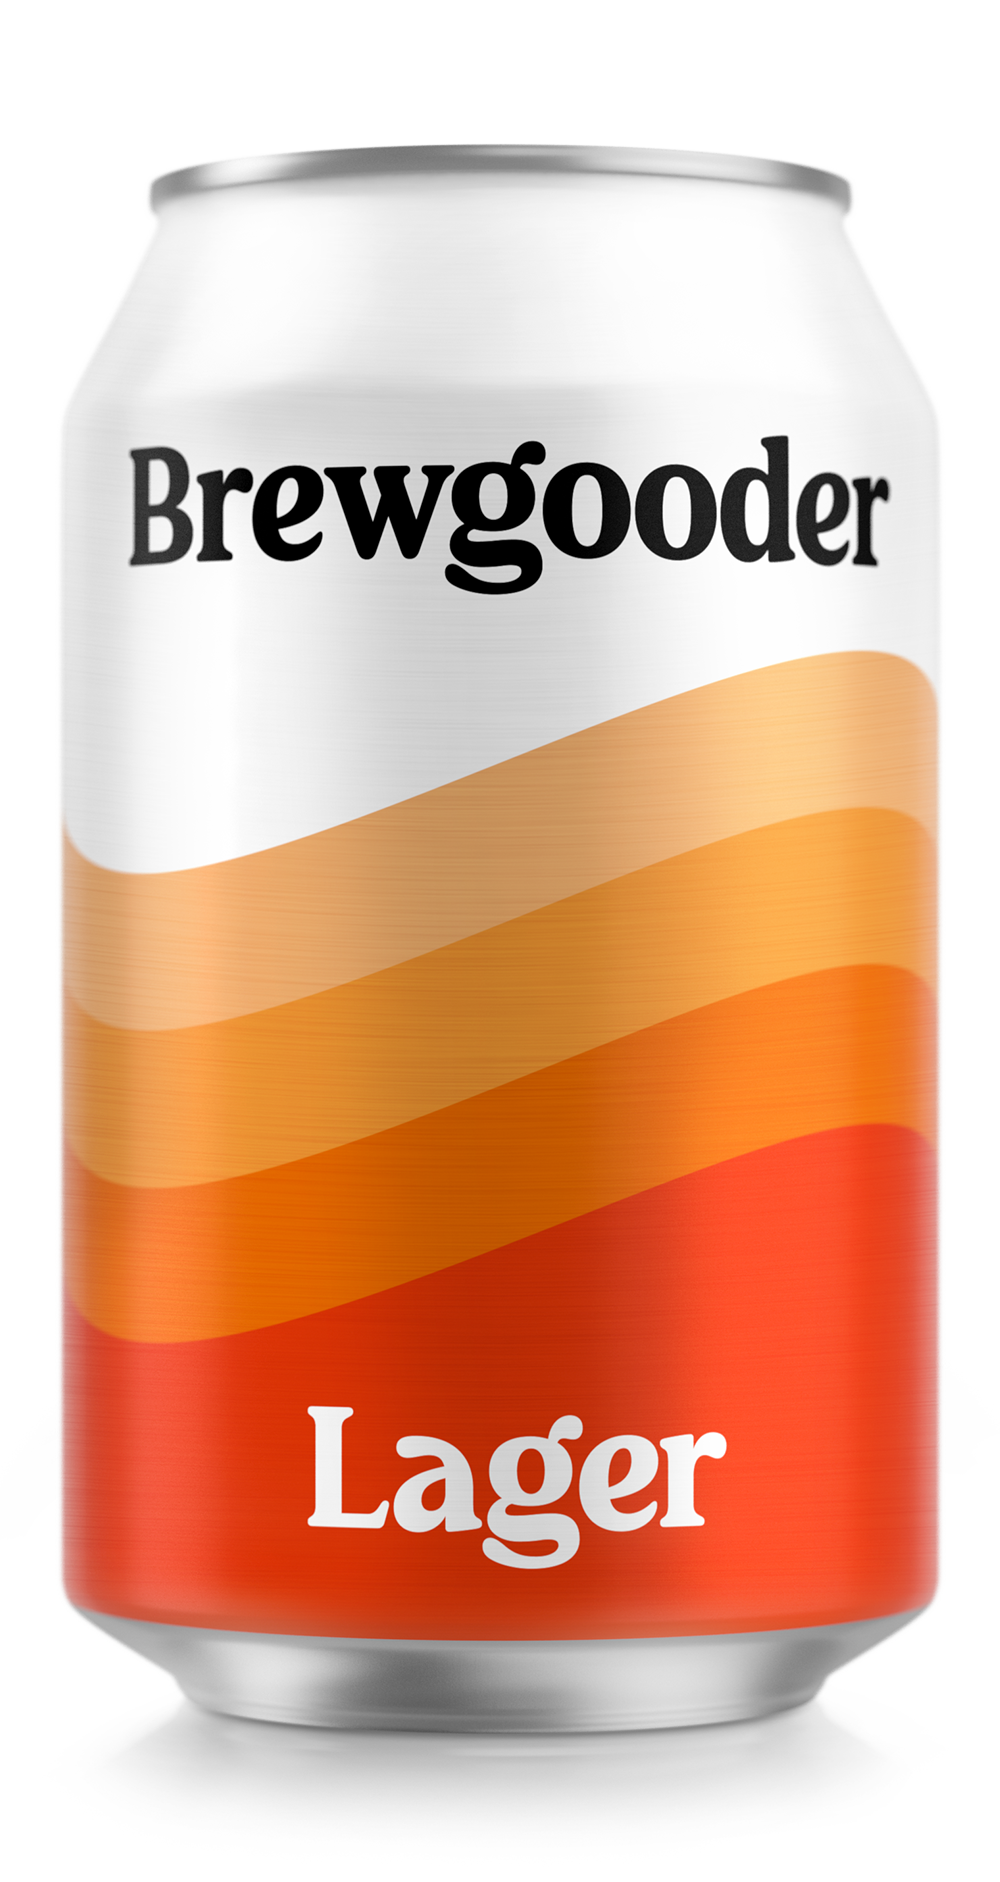 Brewgooder Lager